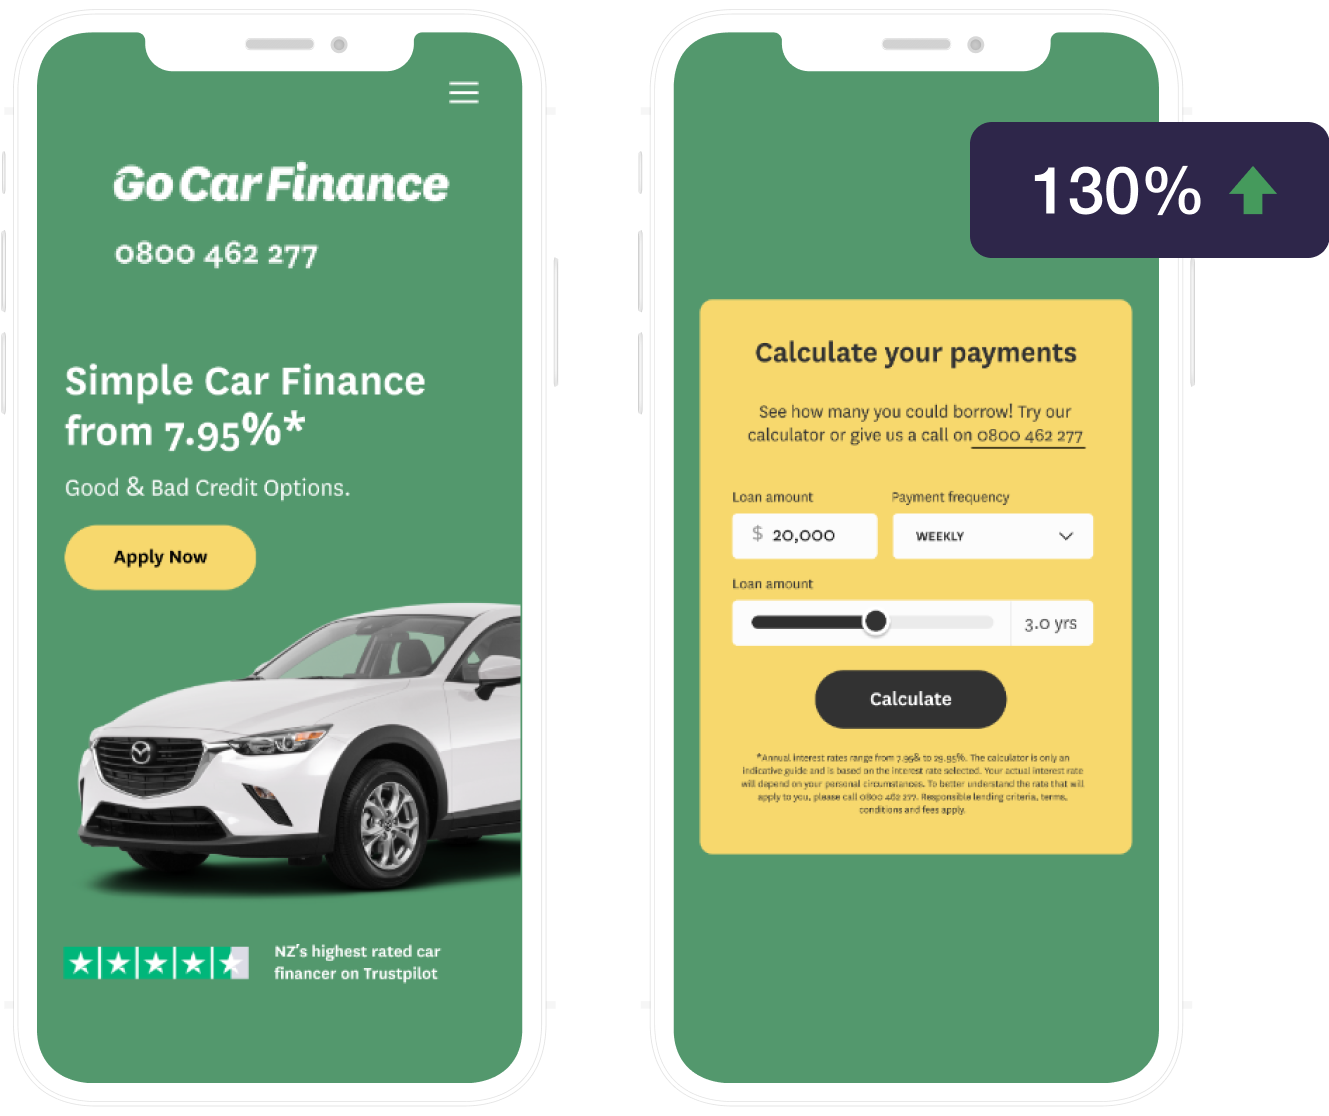 Go Car Finance - Double Performance Marketing Agency